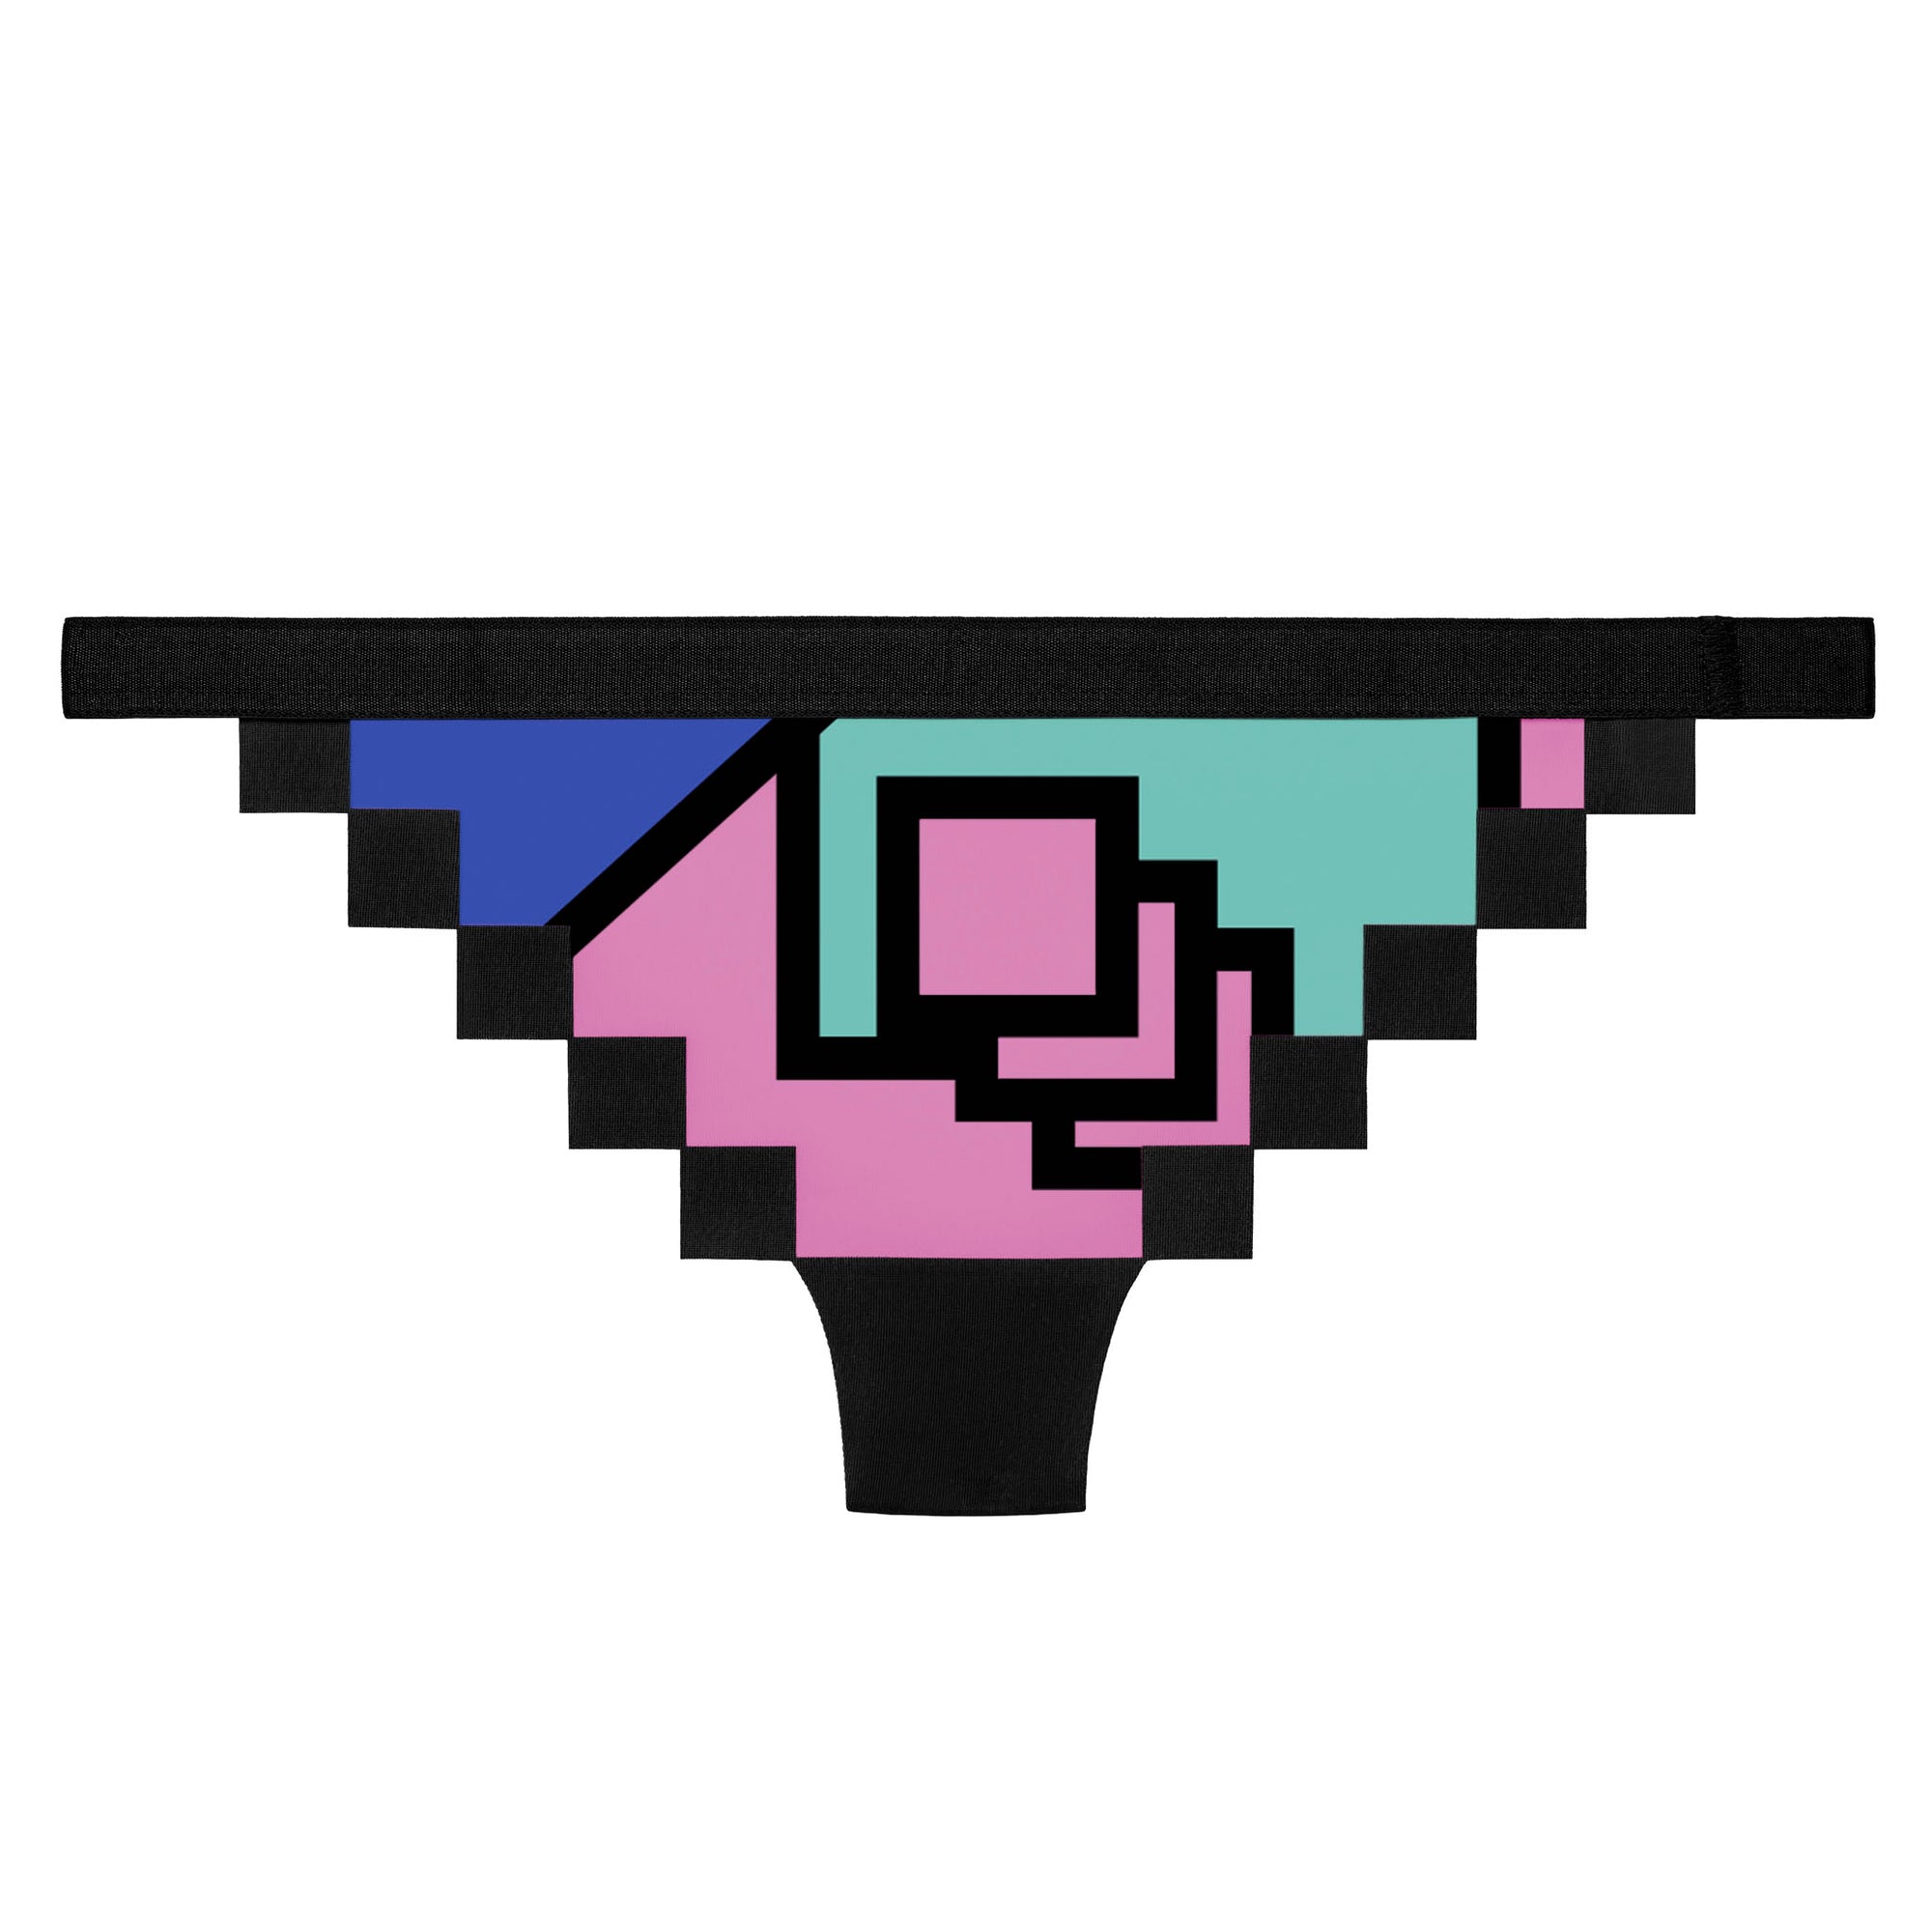 beauty underwear man game pixel art vector illustration 23866652